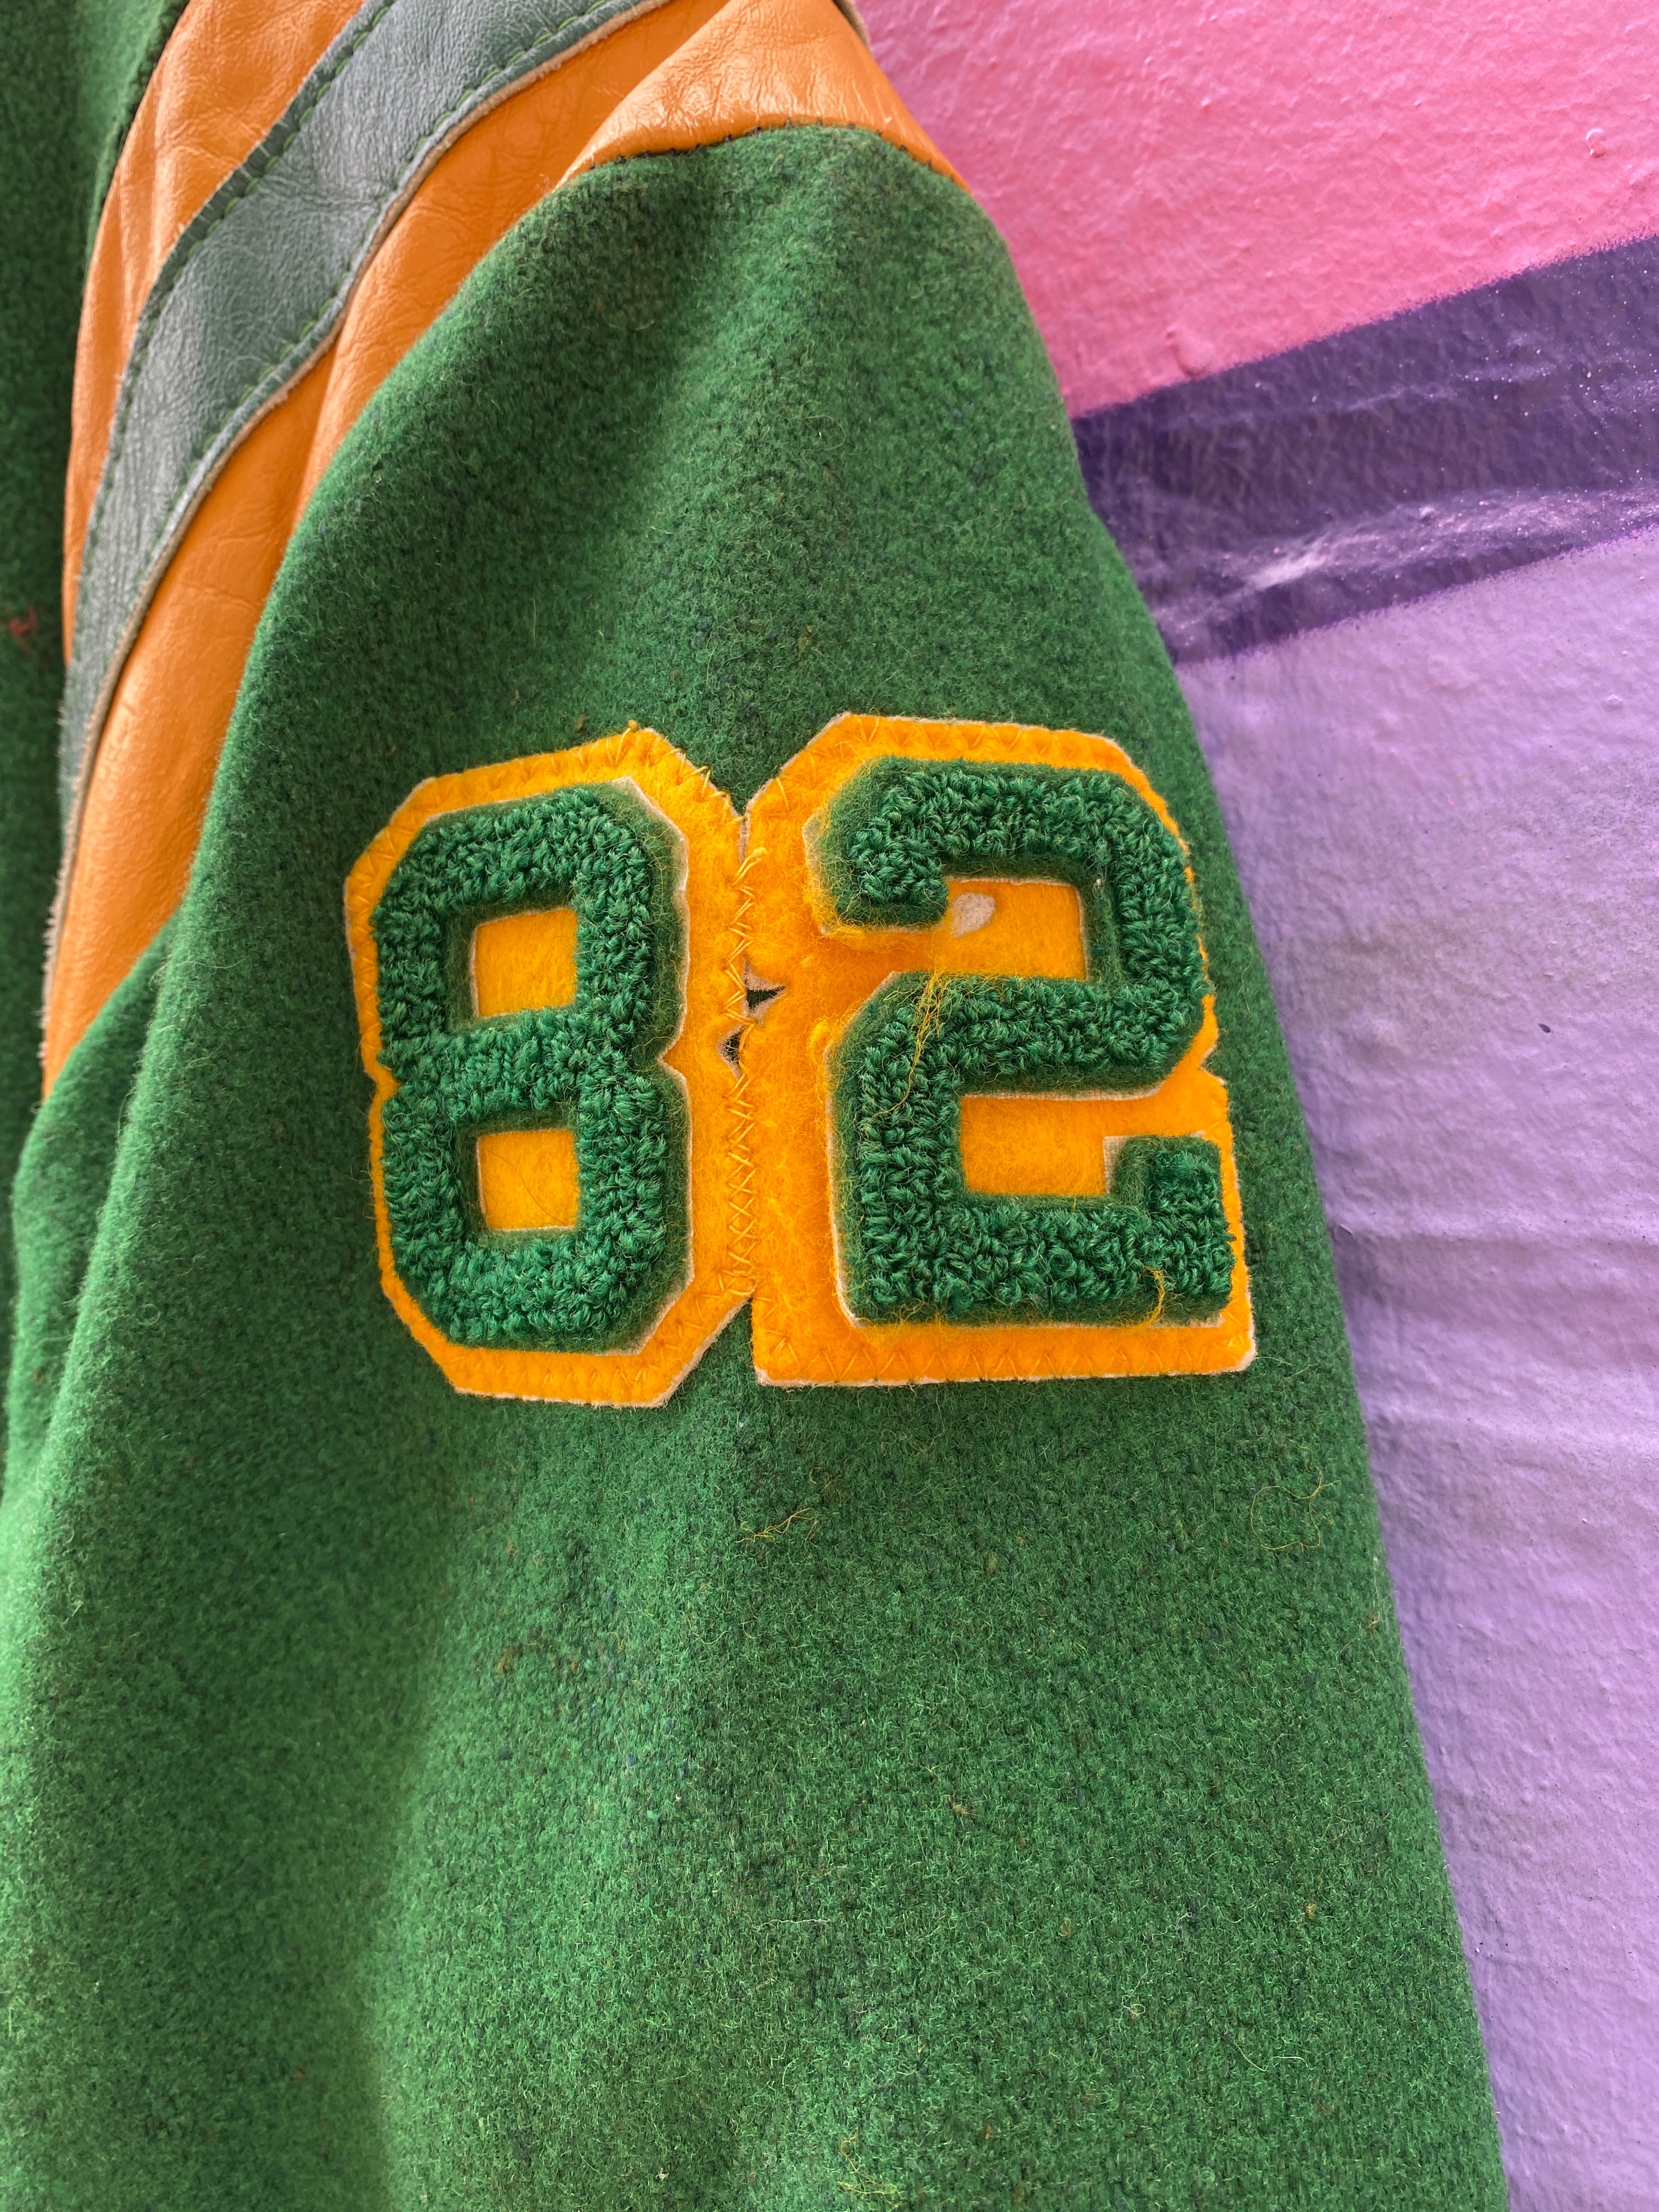 M - Vintage 'Bishop Flaget Panthers' Varsity Jacket Green